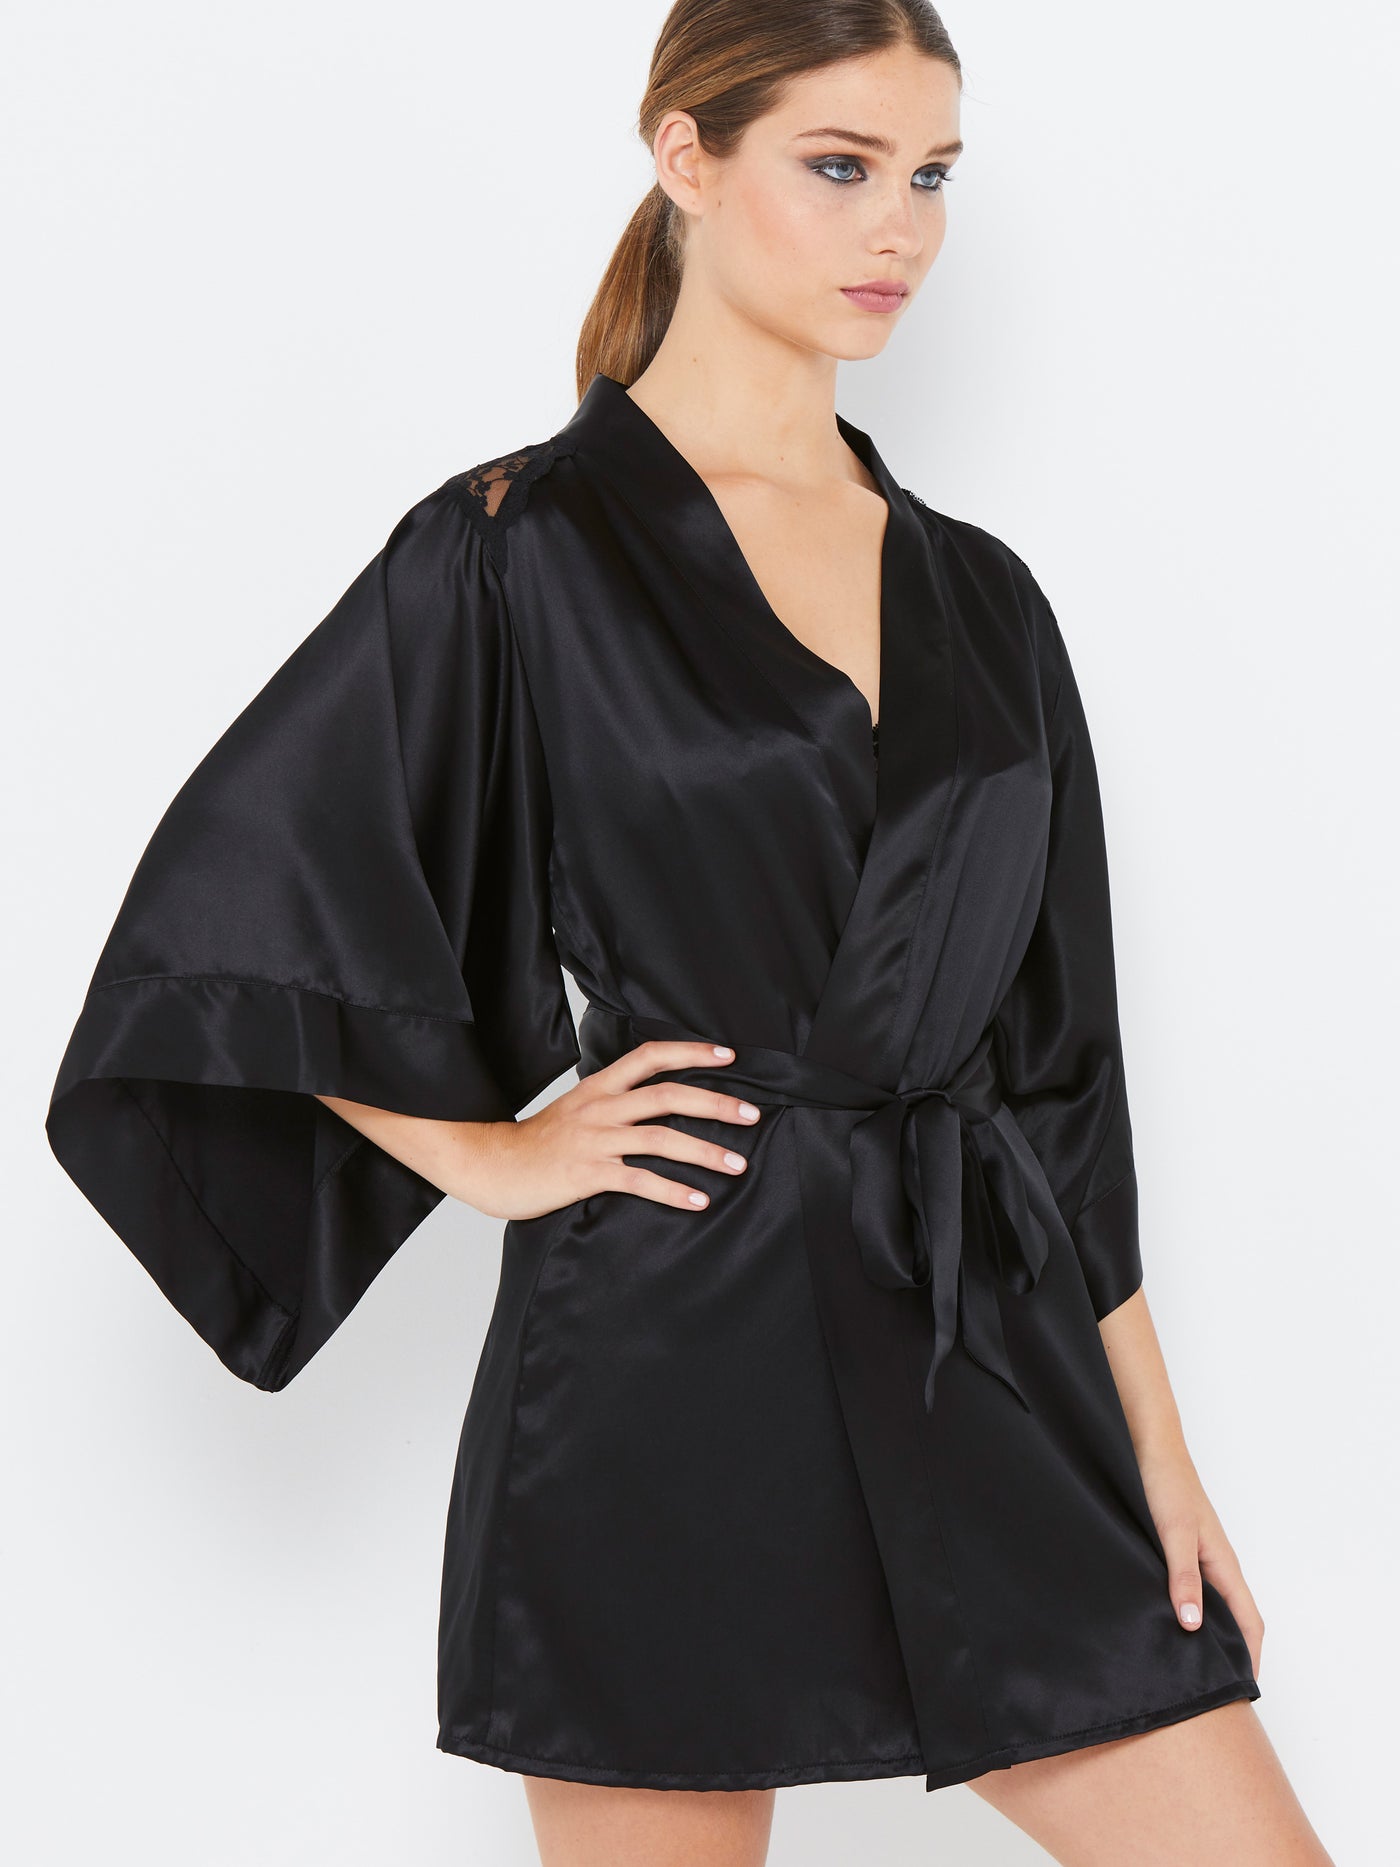 Sophia black silk robe side view